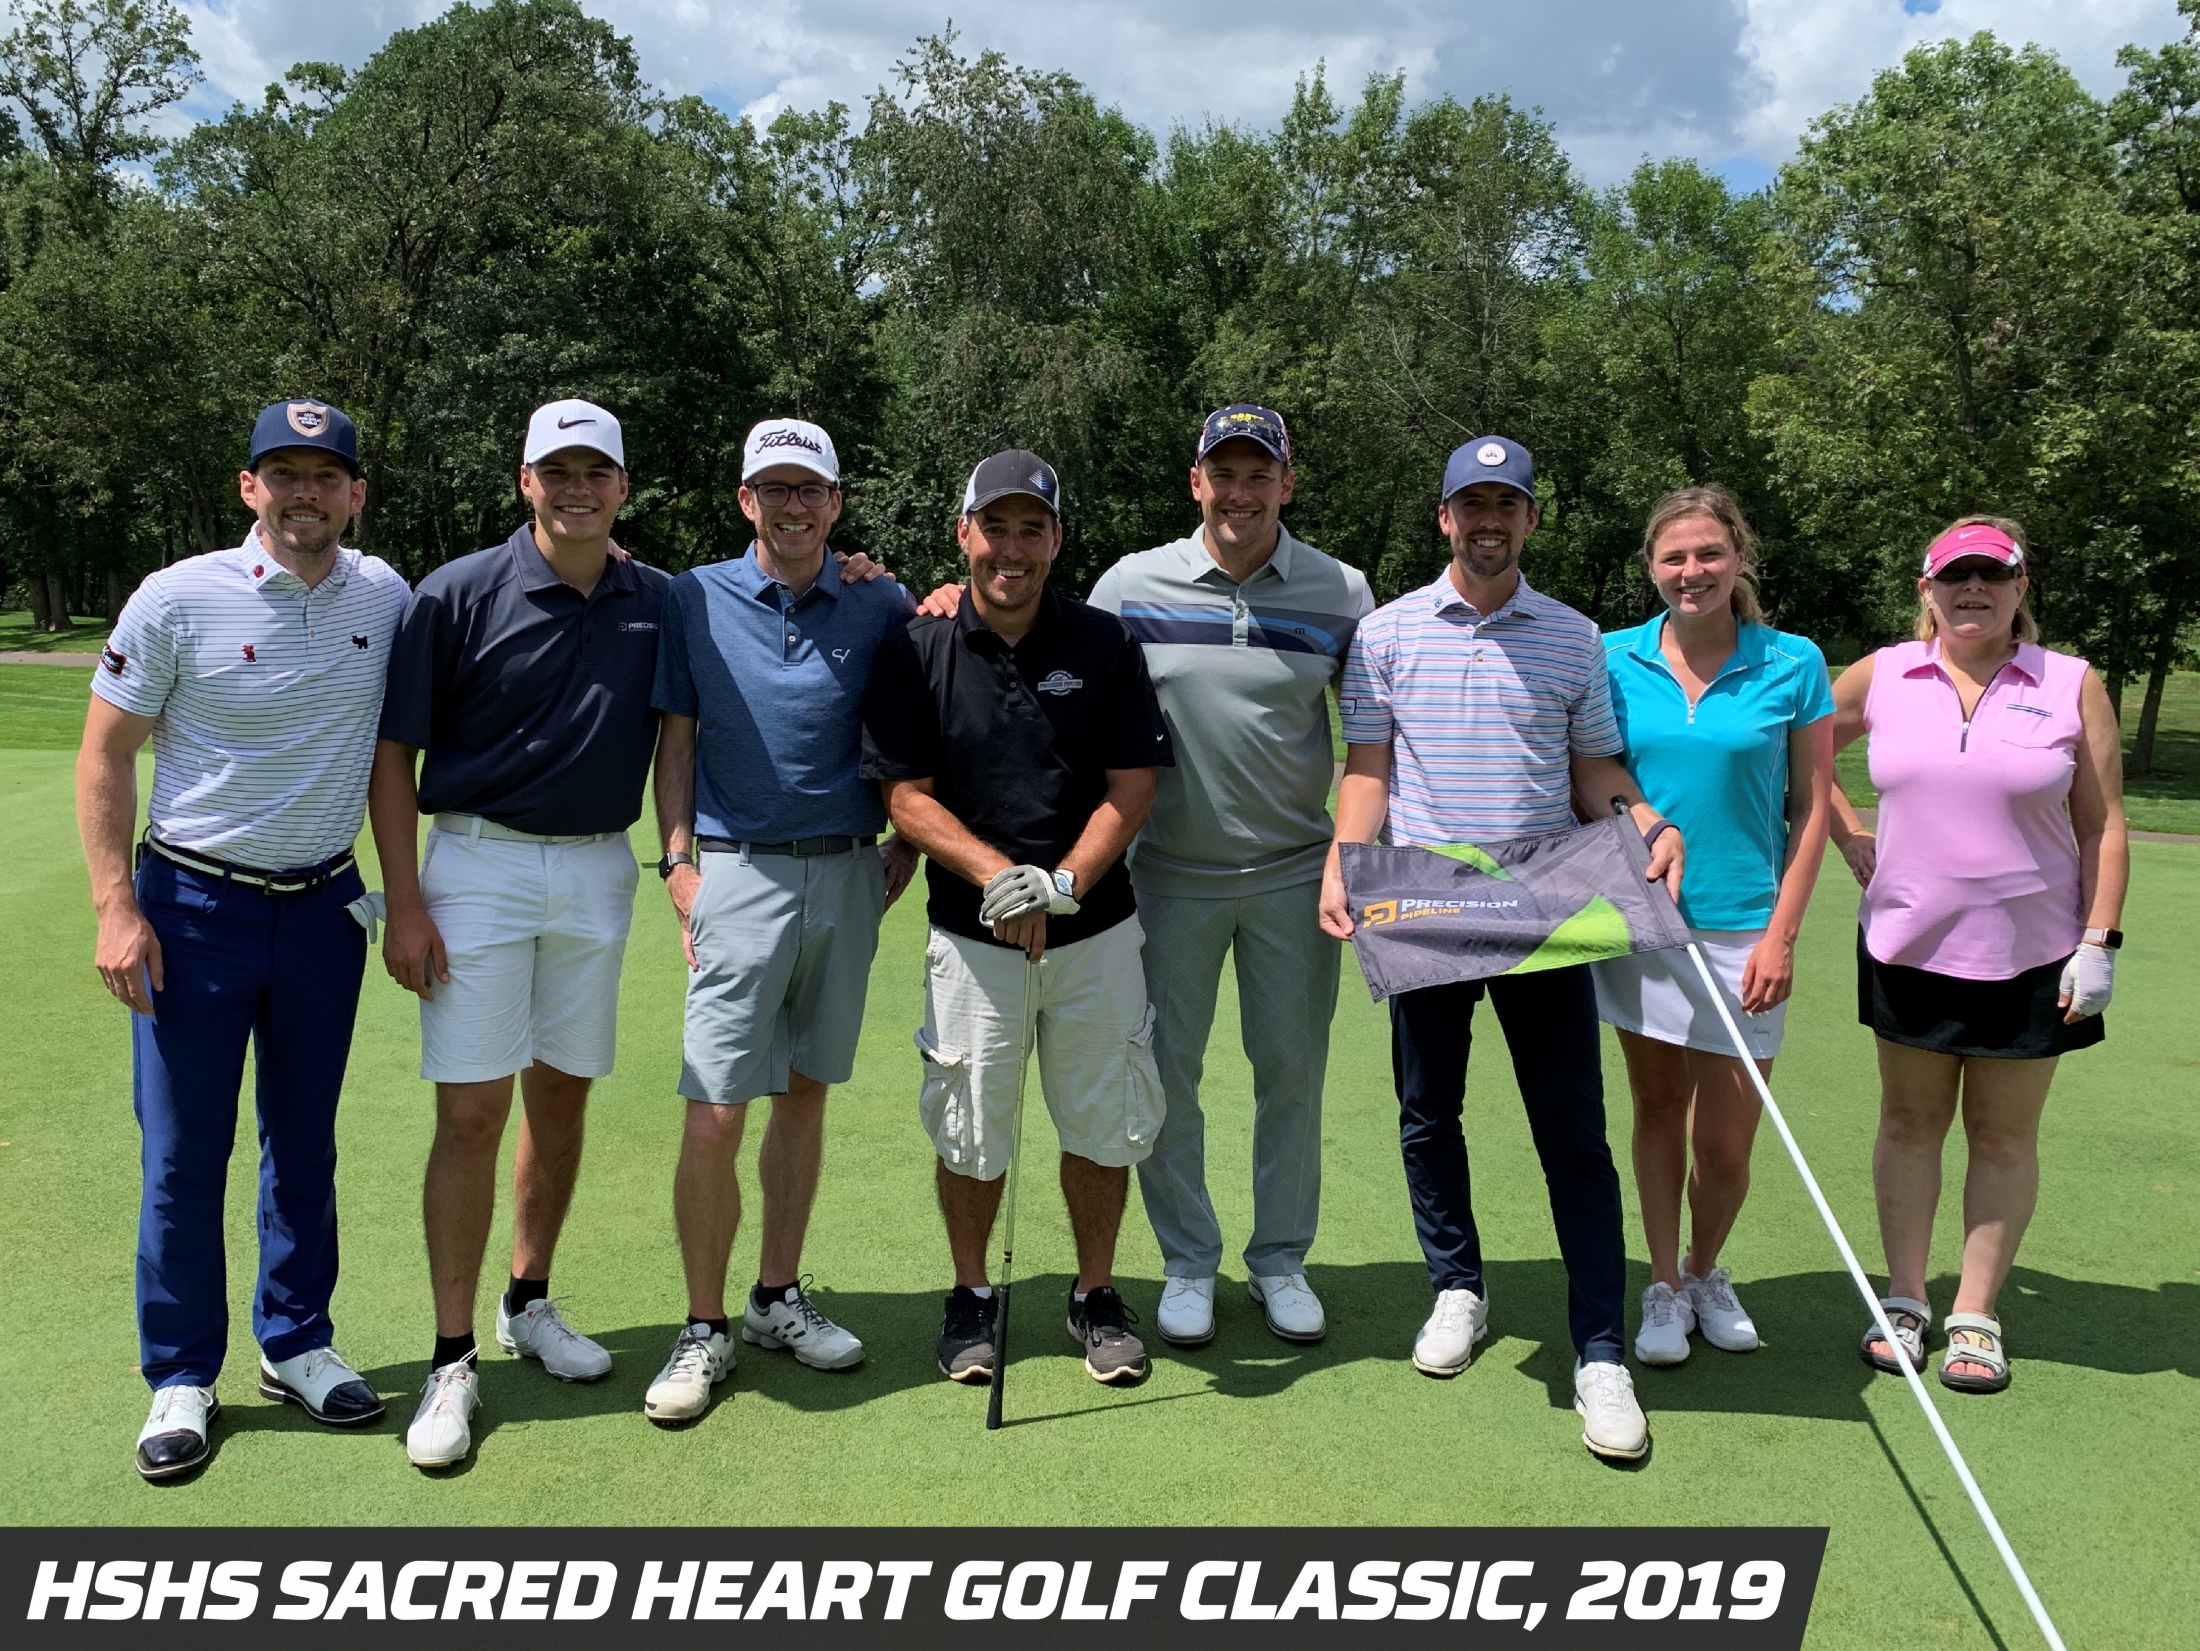 Precision Pipeline Community Involvement: HSHS Sacred Heart Golf Classic, 2019